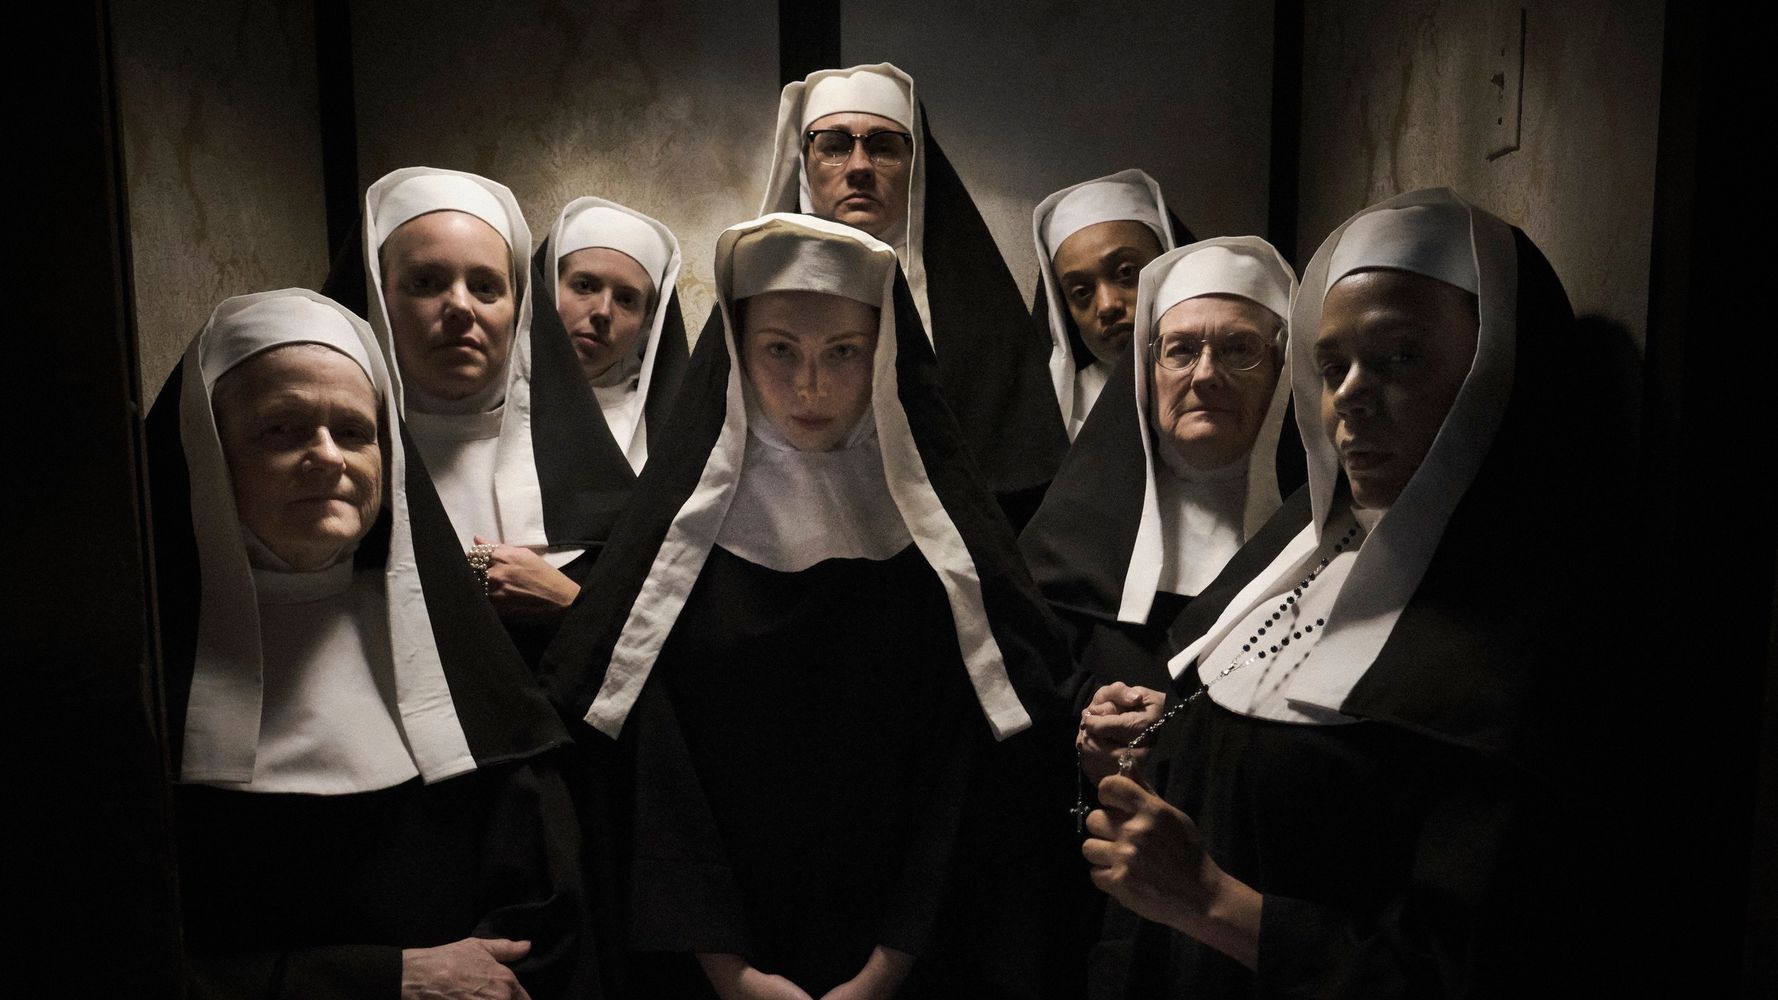 Nunsploitation Films Aren't Just About Nuns. 